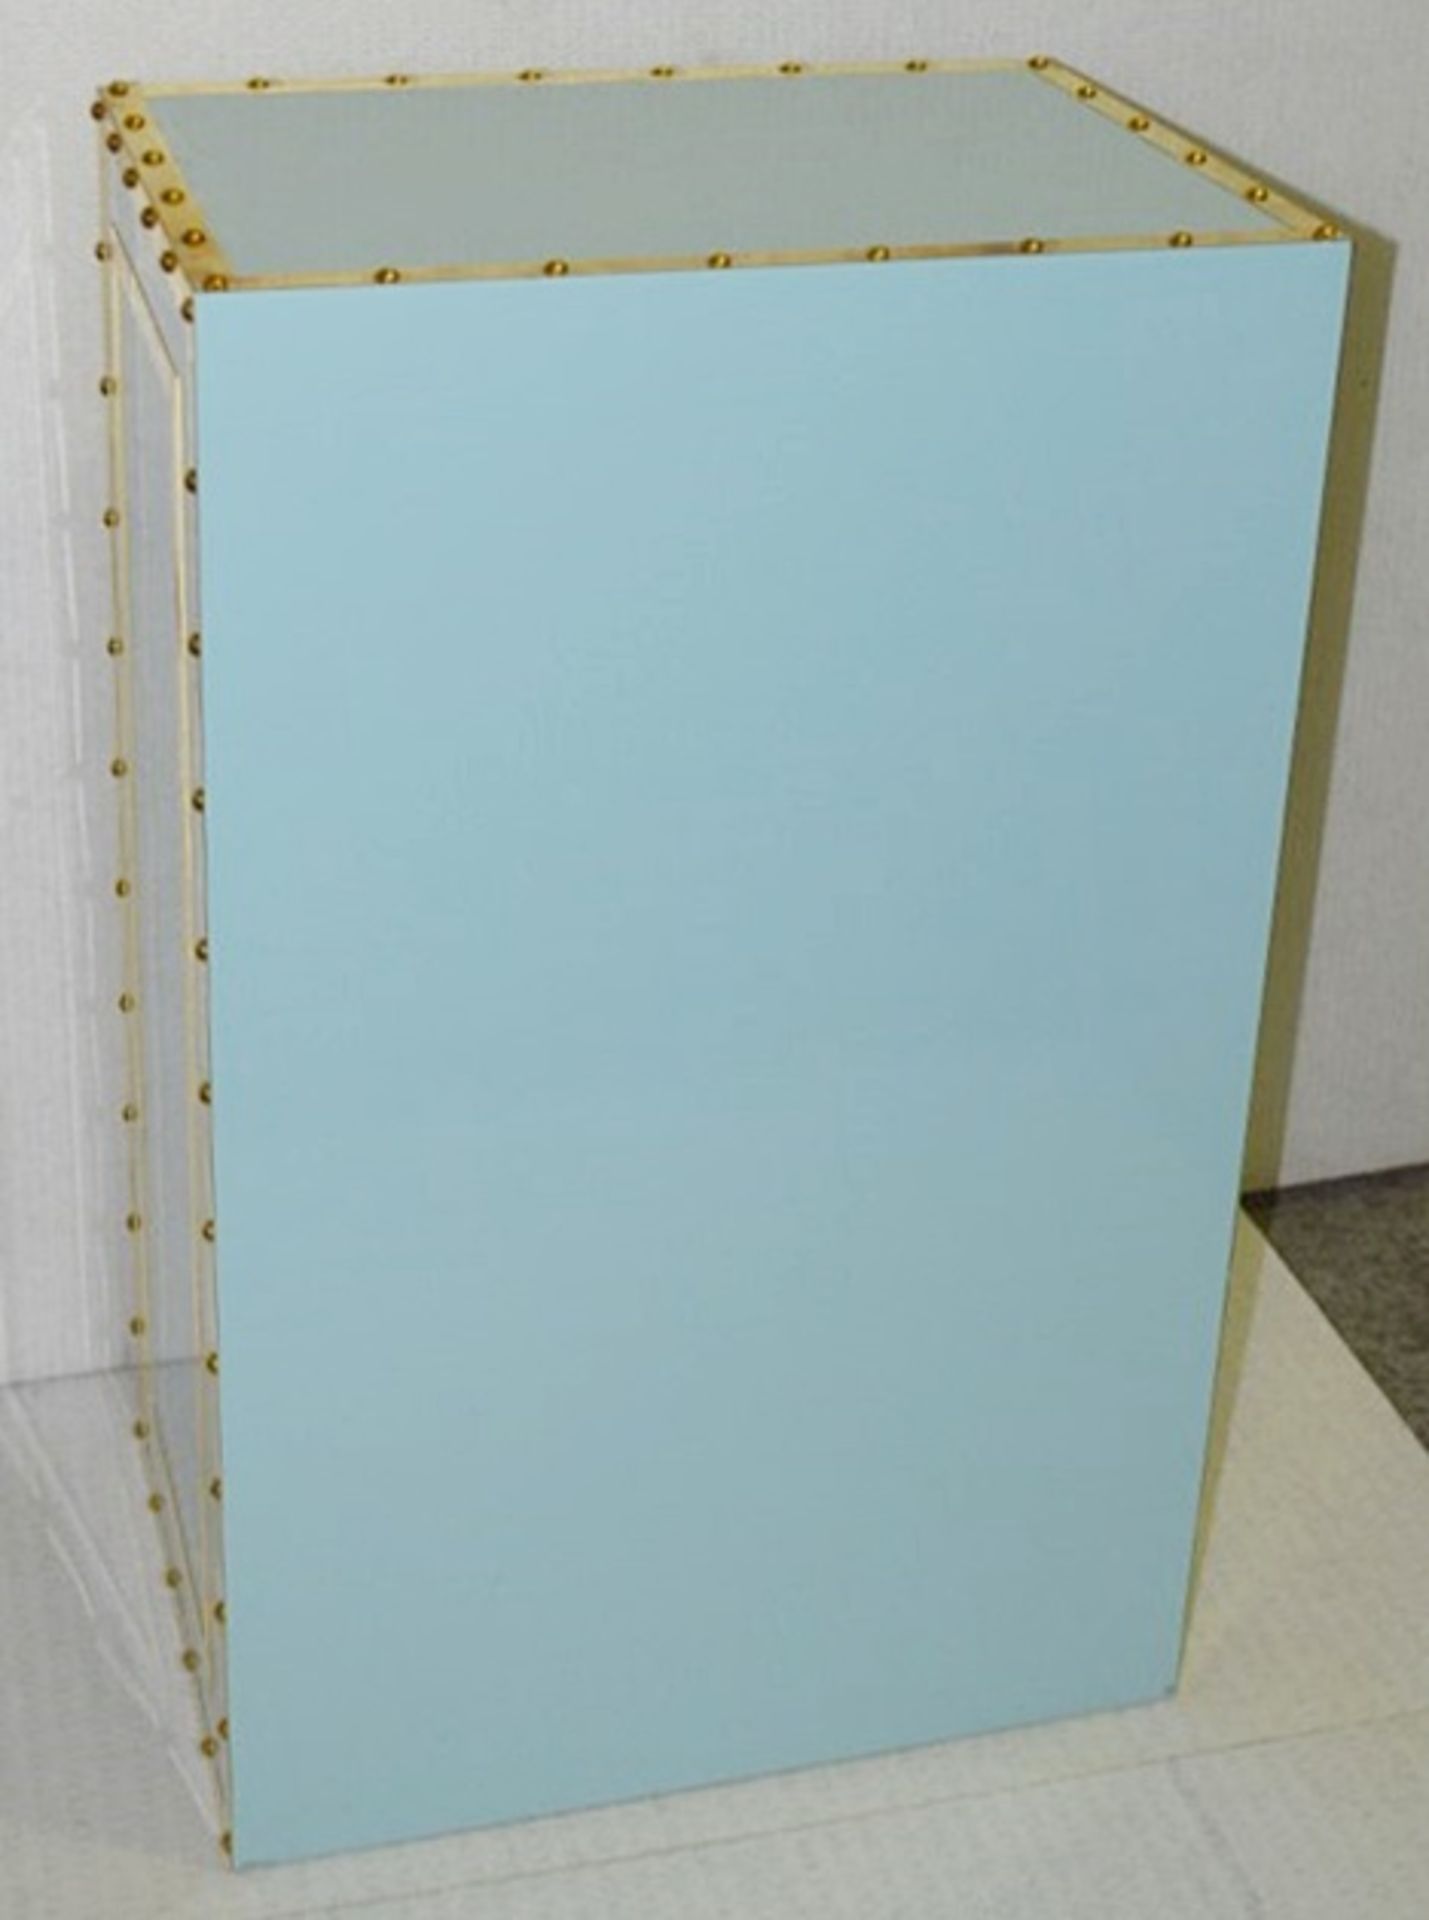 Set Of 3 x Slimline Bank Vault Safe-style Shop Display Plinths In Tiffany Blue With Gold Trim - Image 6 of 7